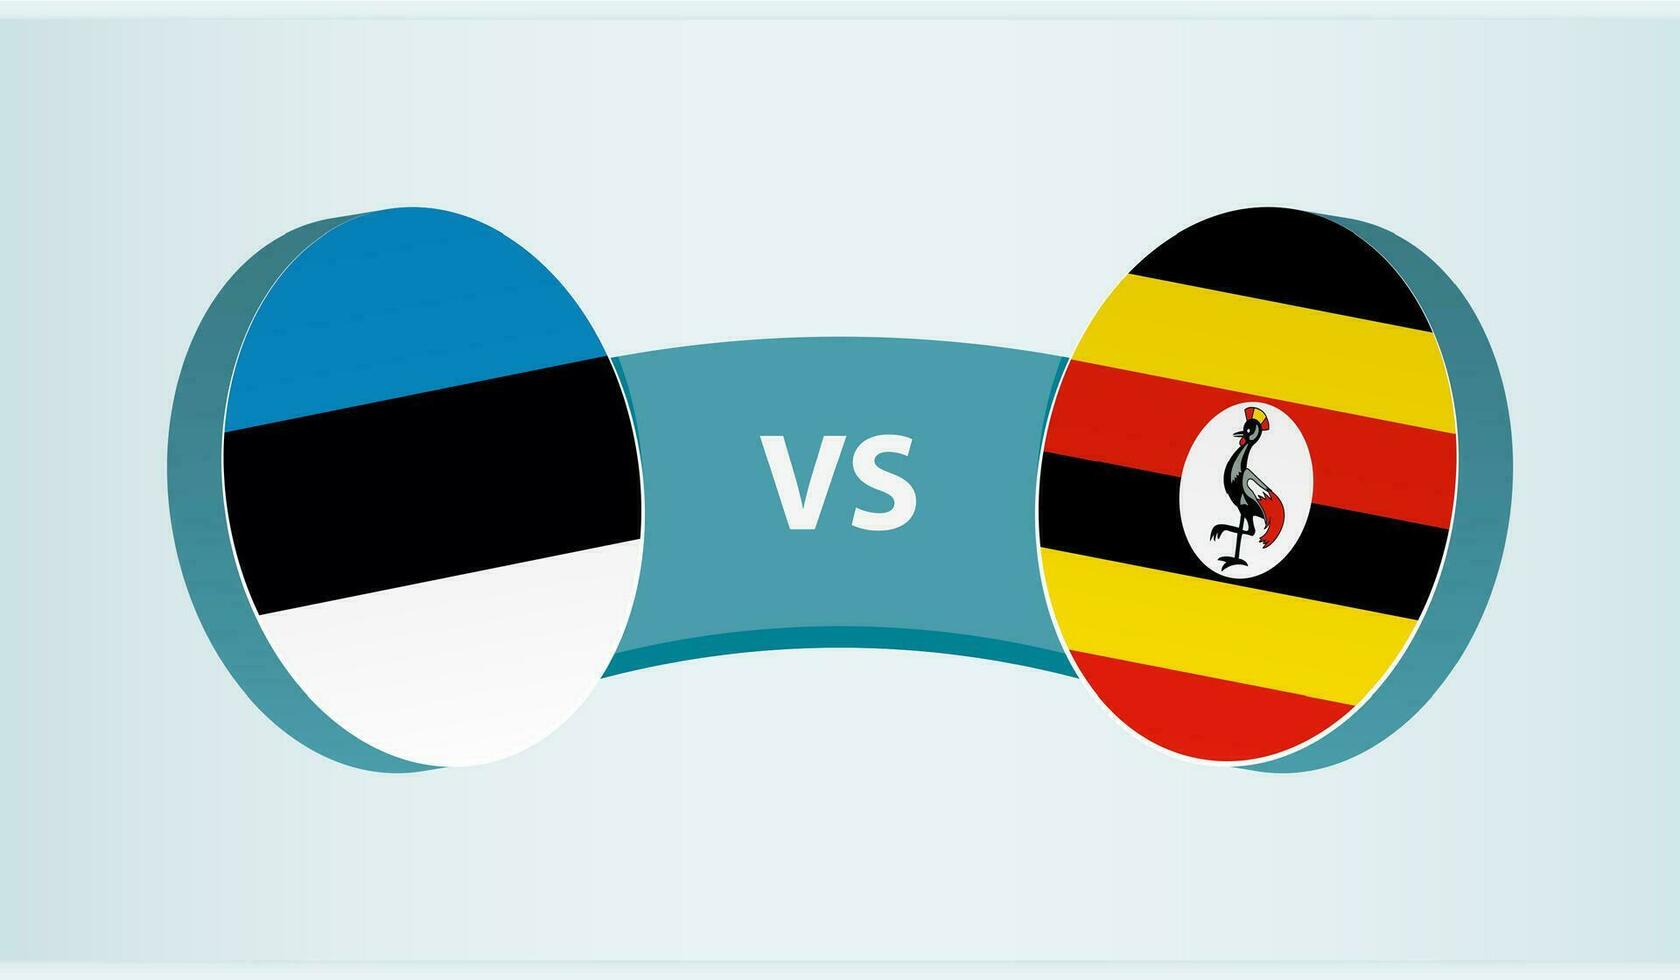 estland mot uganda, team sporter konkurrens begrepp. vektor